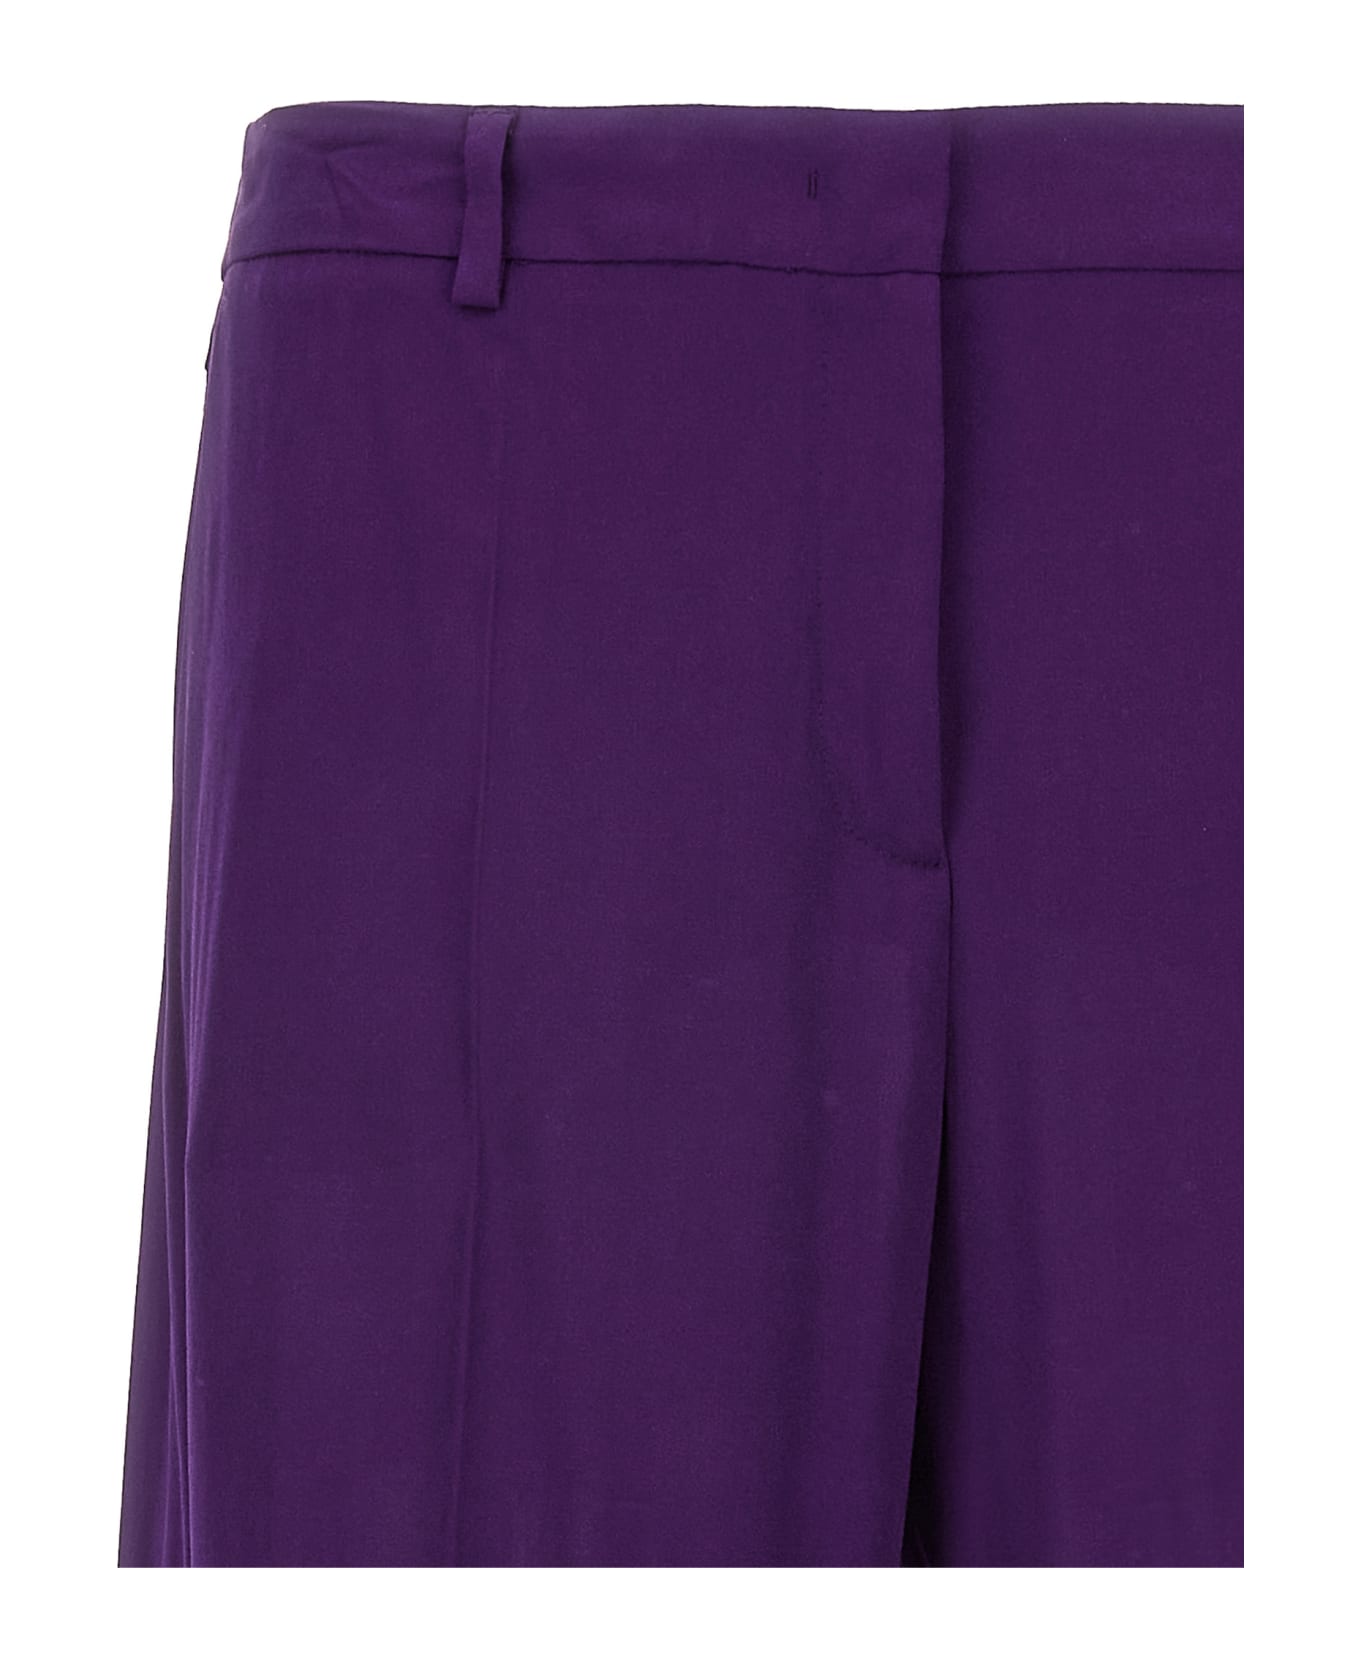 Alberto Biani 'hippy' Trousers - Purple